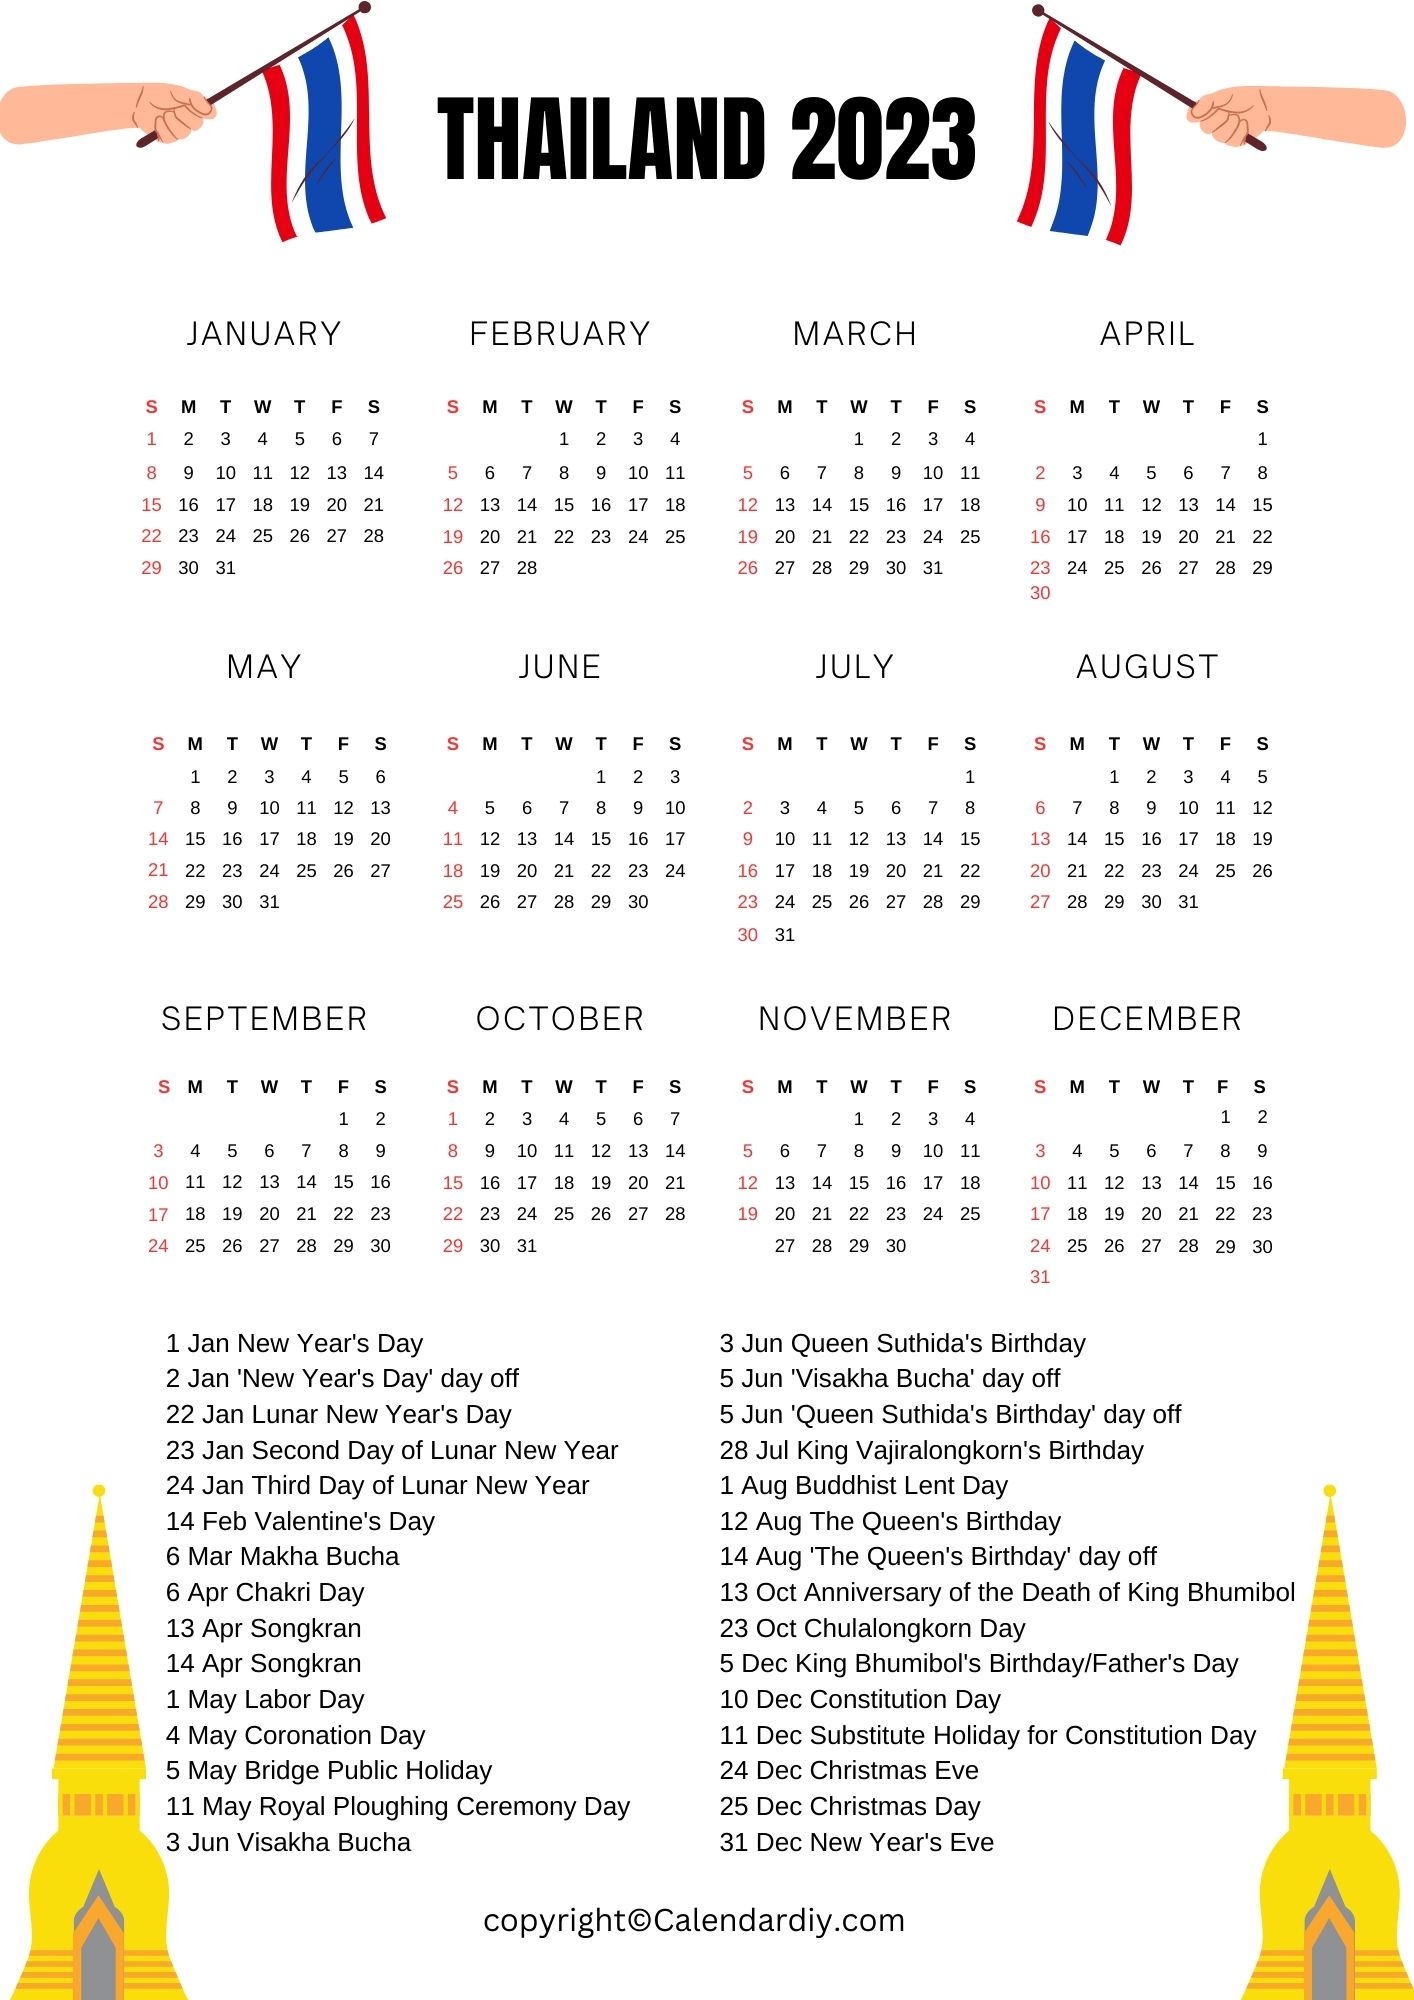 Thailand Calendar 2023 Public Holidays